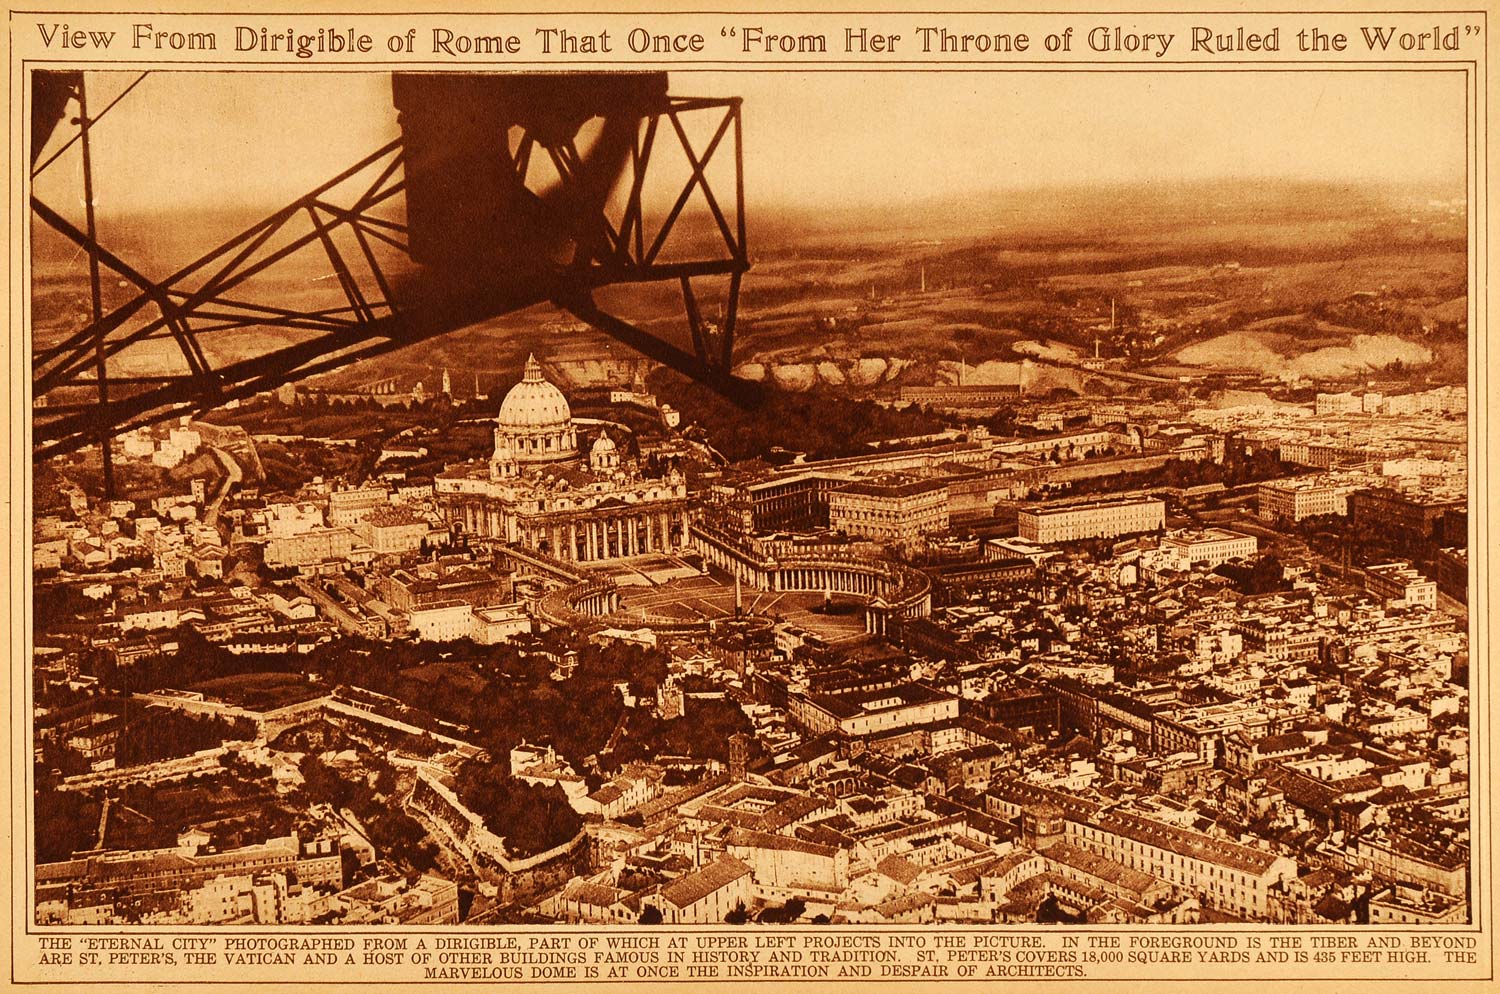 1922 Rotogravure Dirigible Rome Vatican Cityscape Bird's Eye View Historic Image